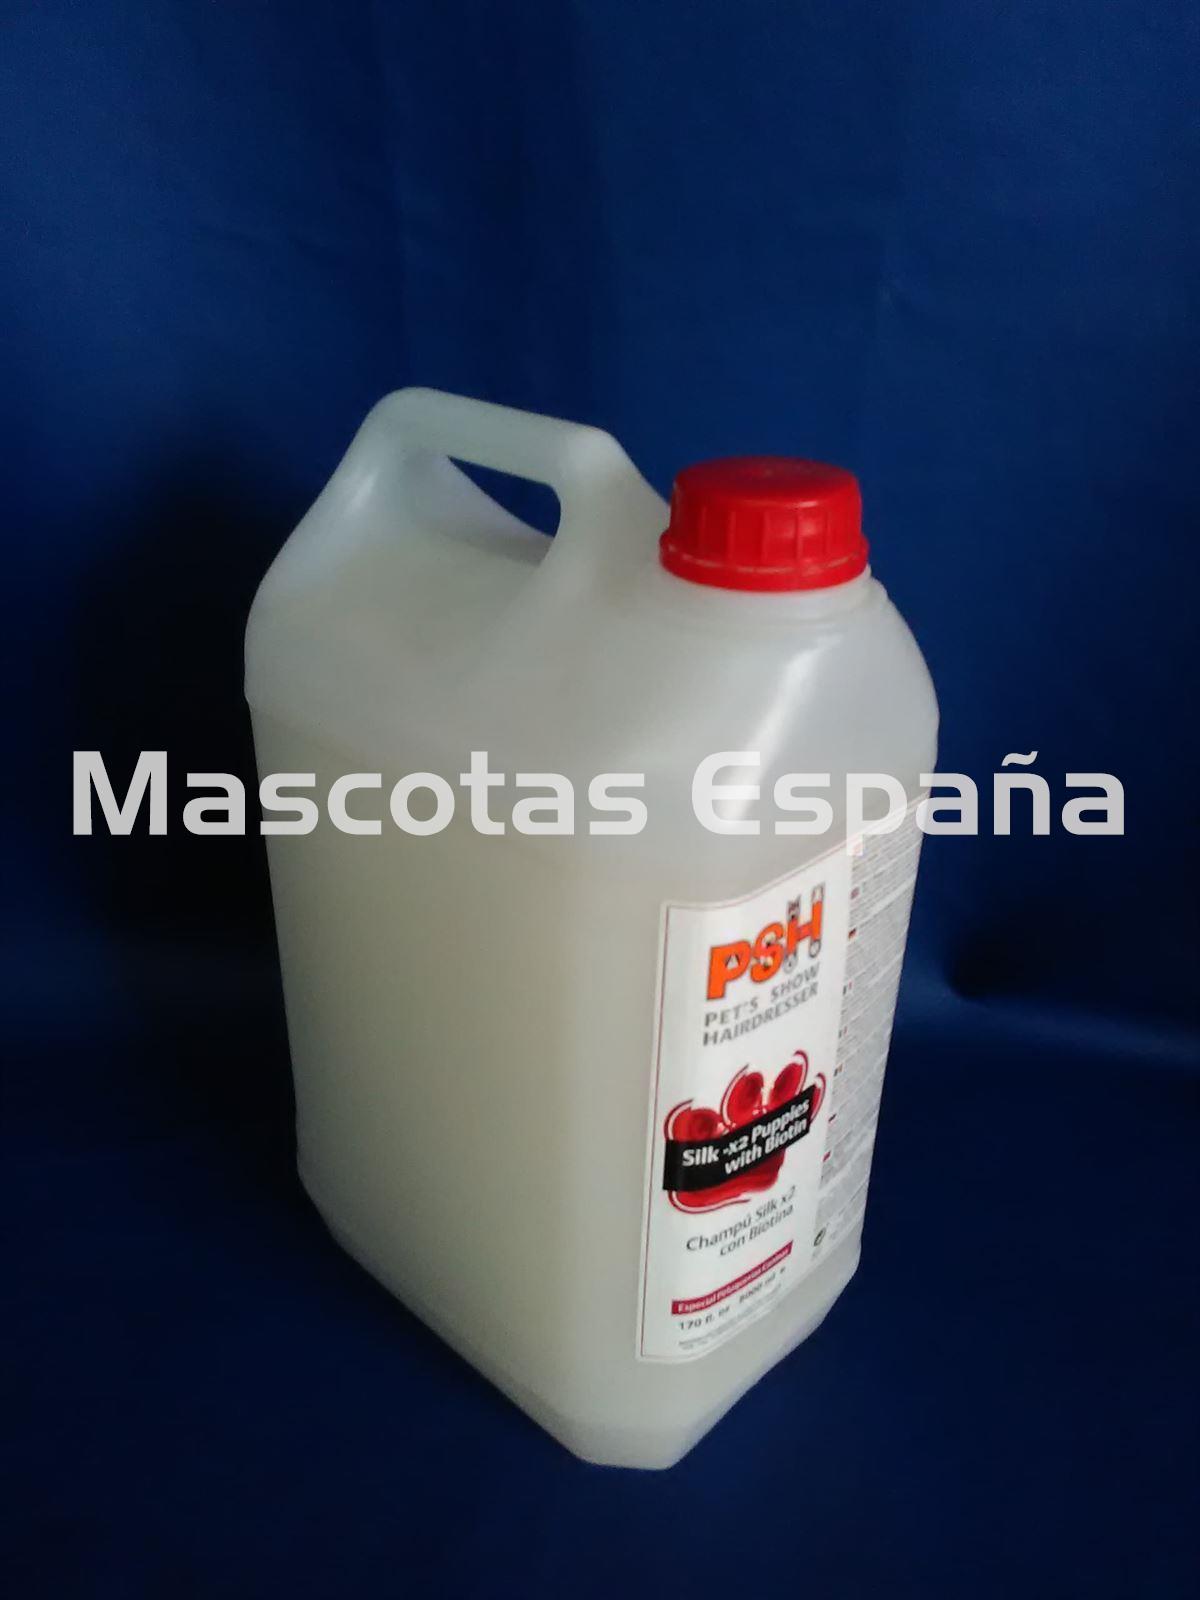 PSH Silk-X2 Puppies With Biotin Shampoo (Champú Silk X2 con Biotina) 5L - Imagen 1